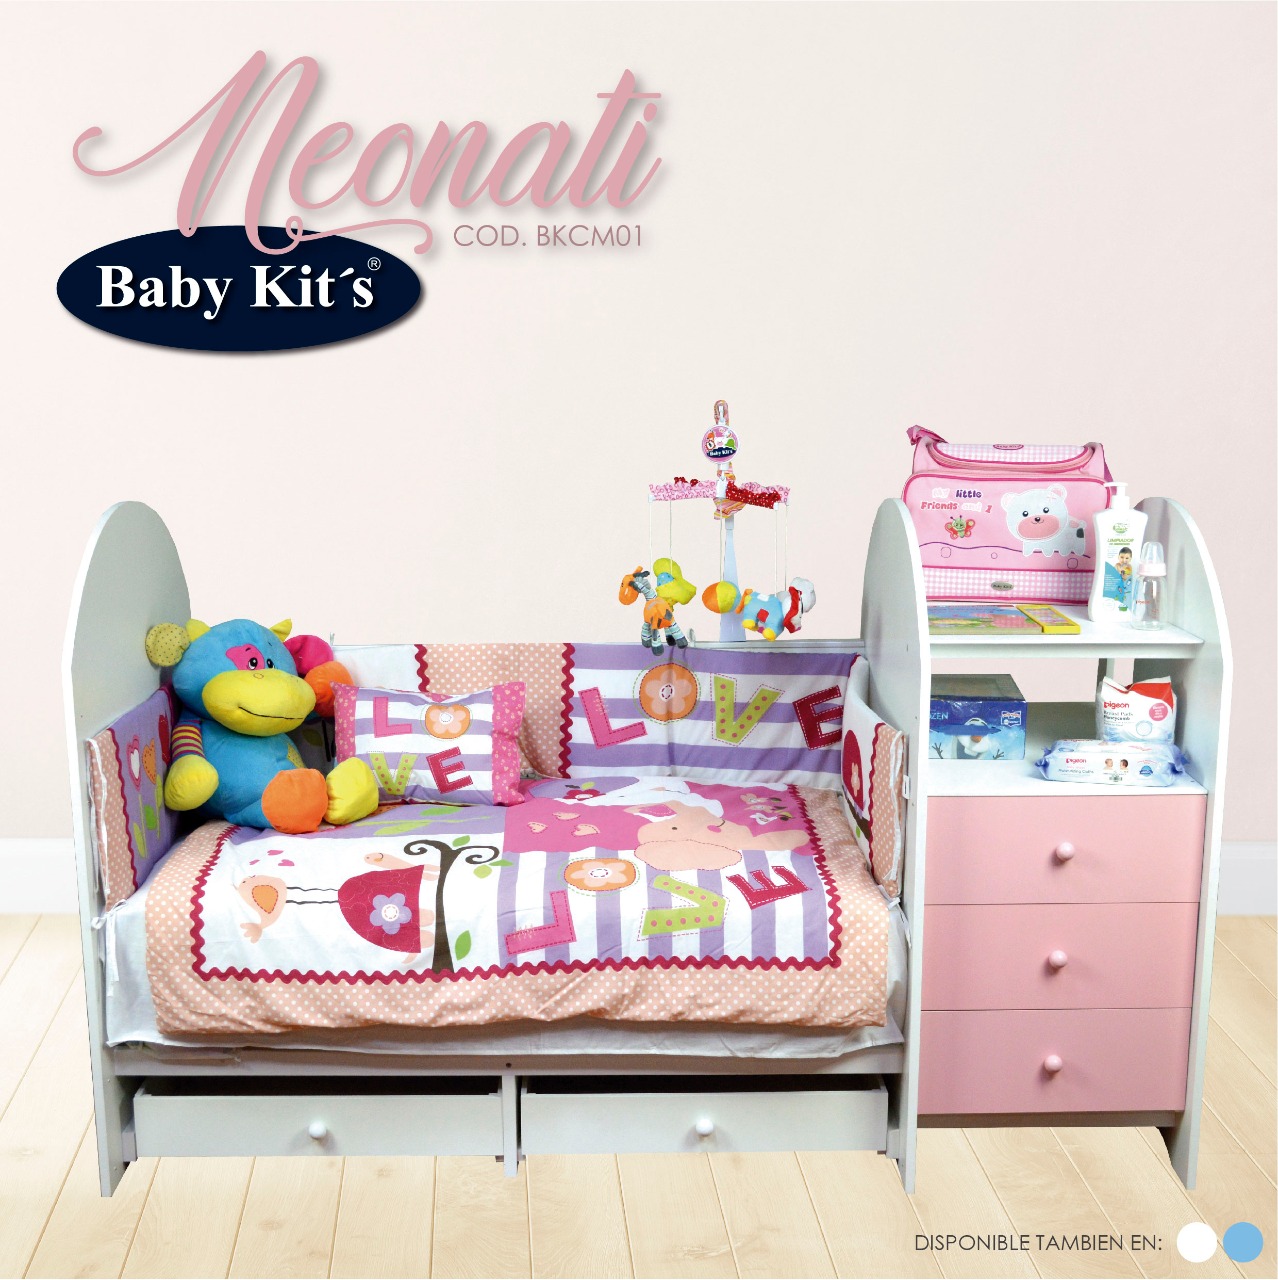 Cuna de Madera Neonati, Marca Baby Kits, BKCM01 – Tiendas Canelita